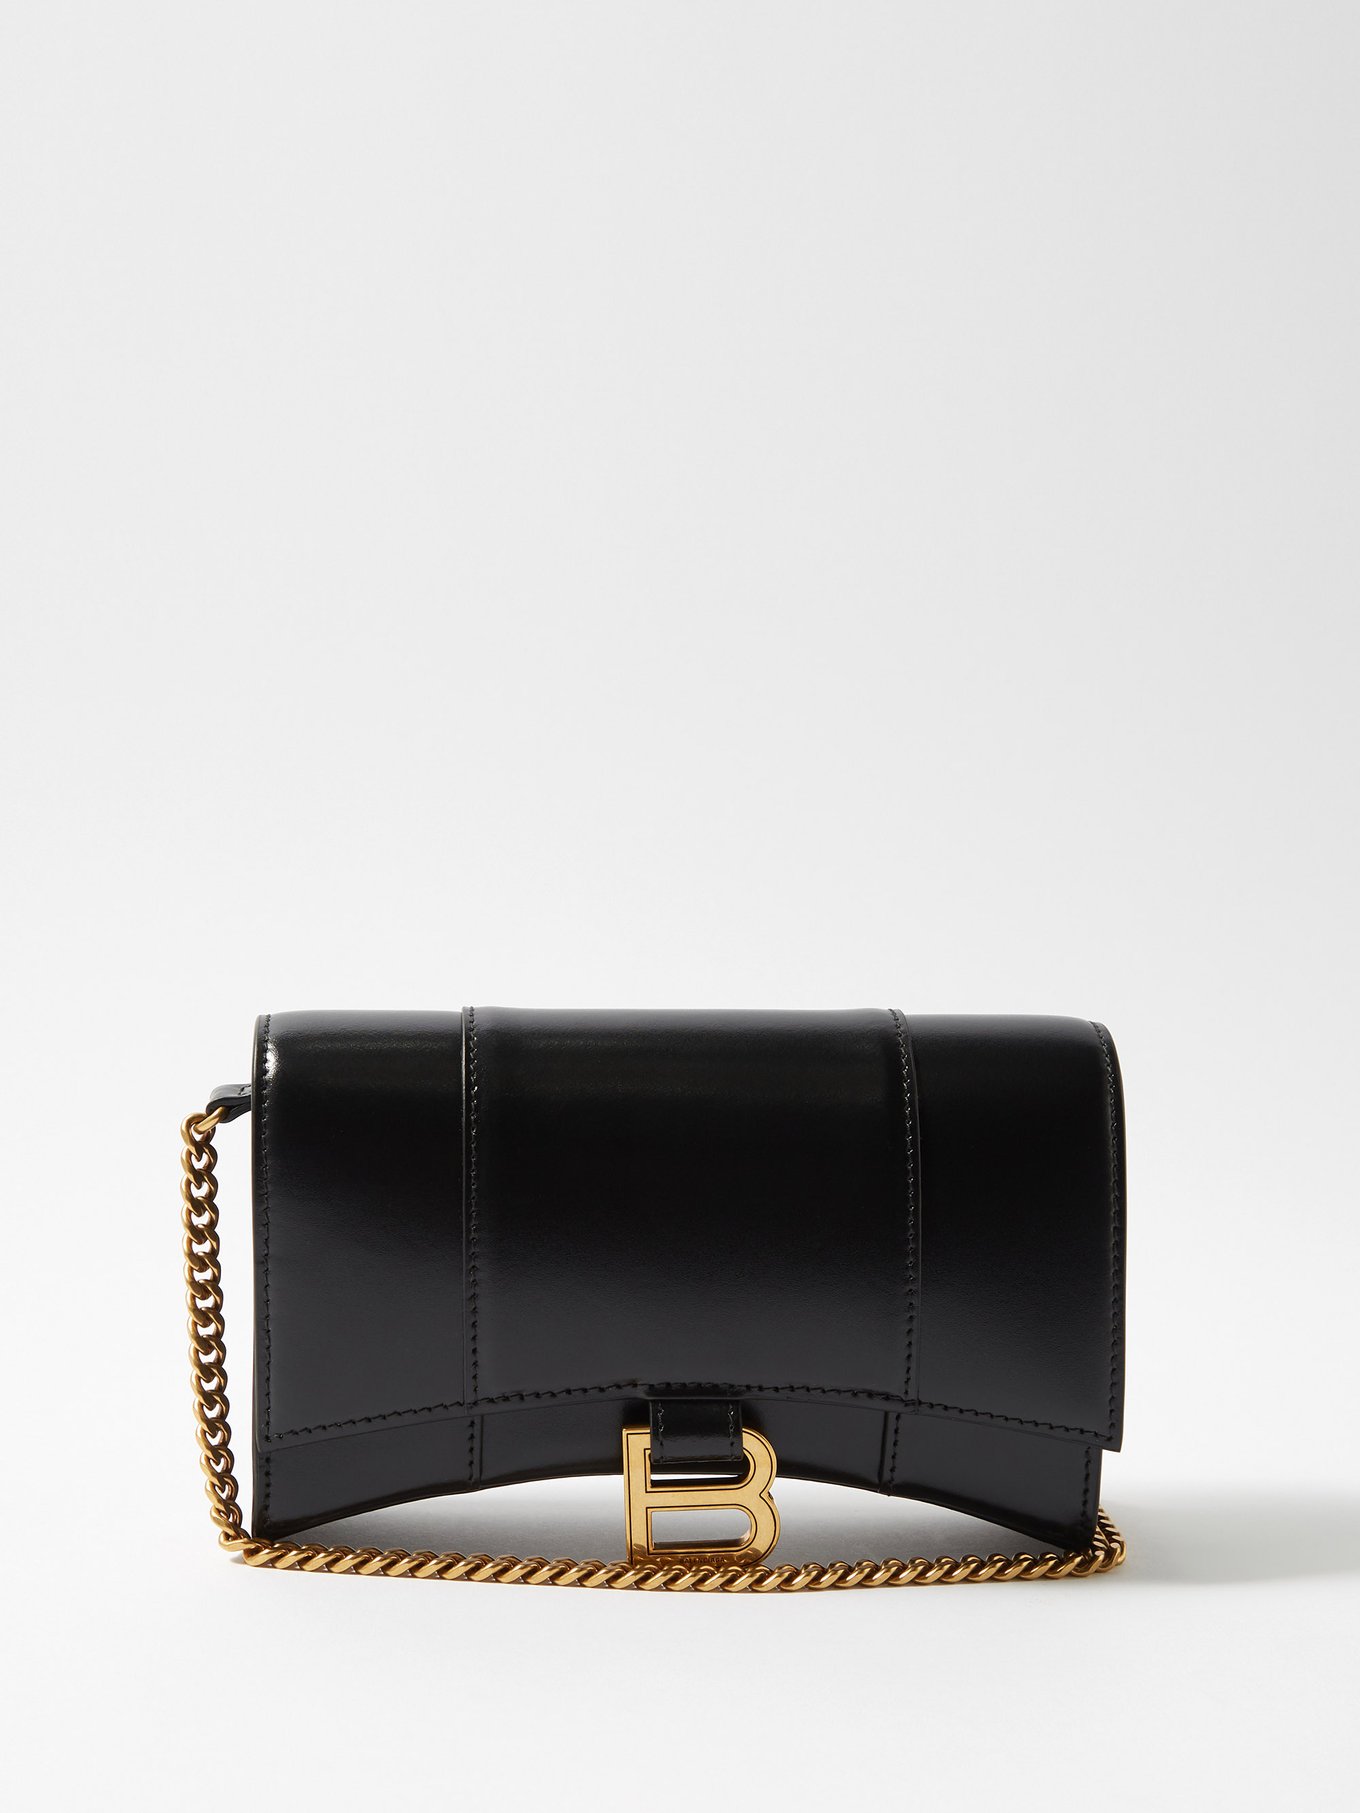 BALENCIAGA: Hourglass XS bag in leather - Black  Balenciaga mini bag  5928331QJ4M online at